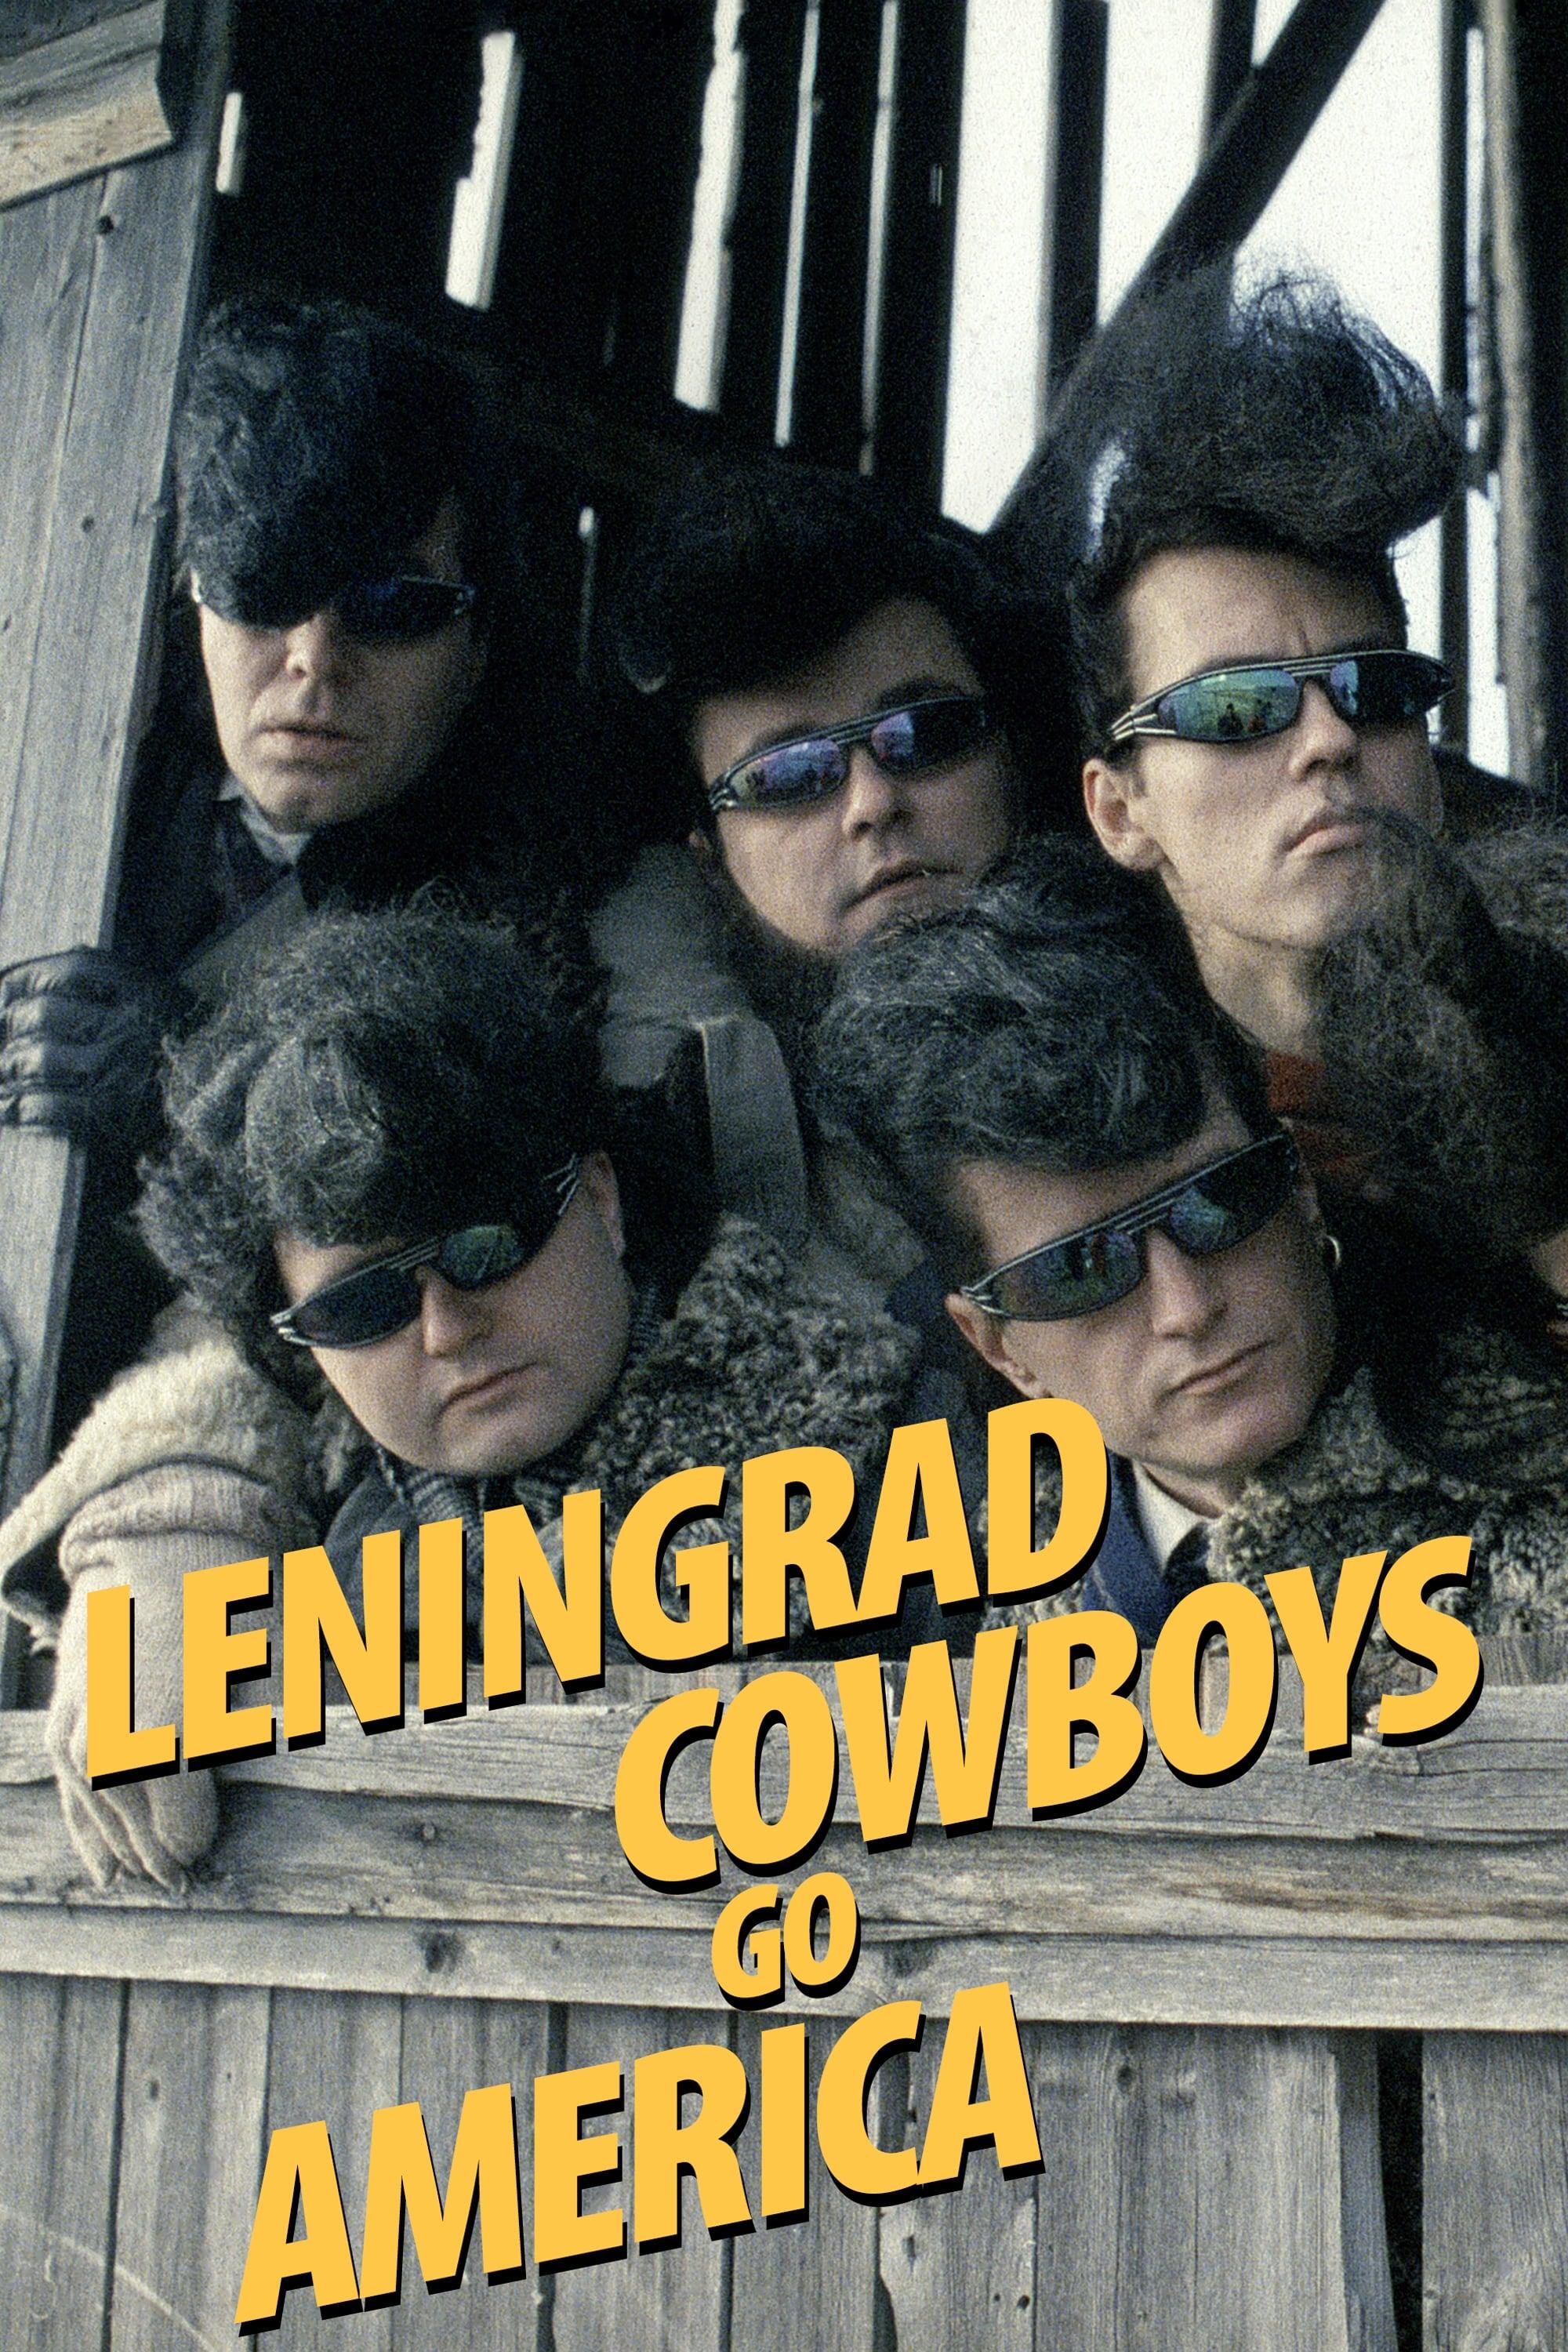 Leningrad Cowboys Go America poster